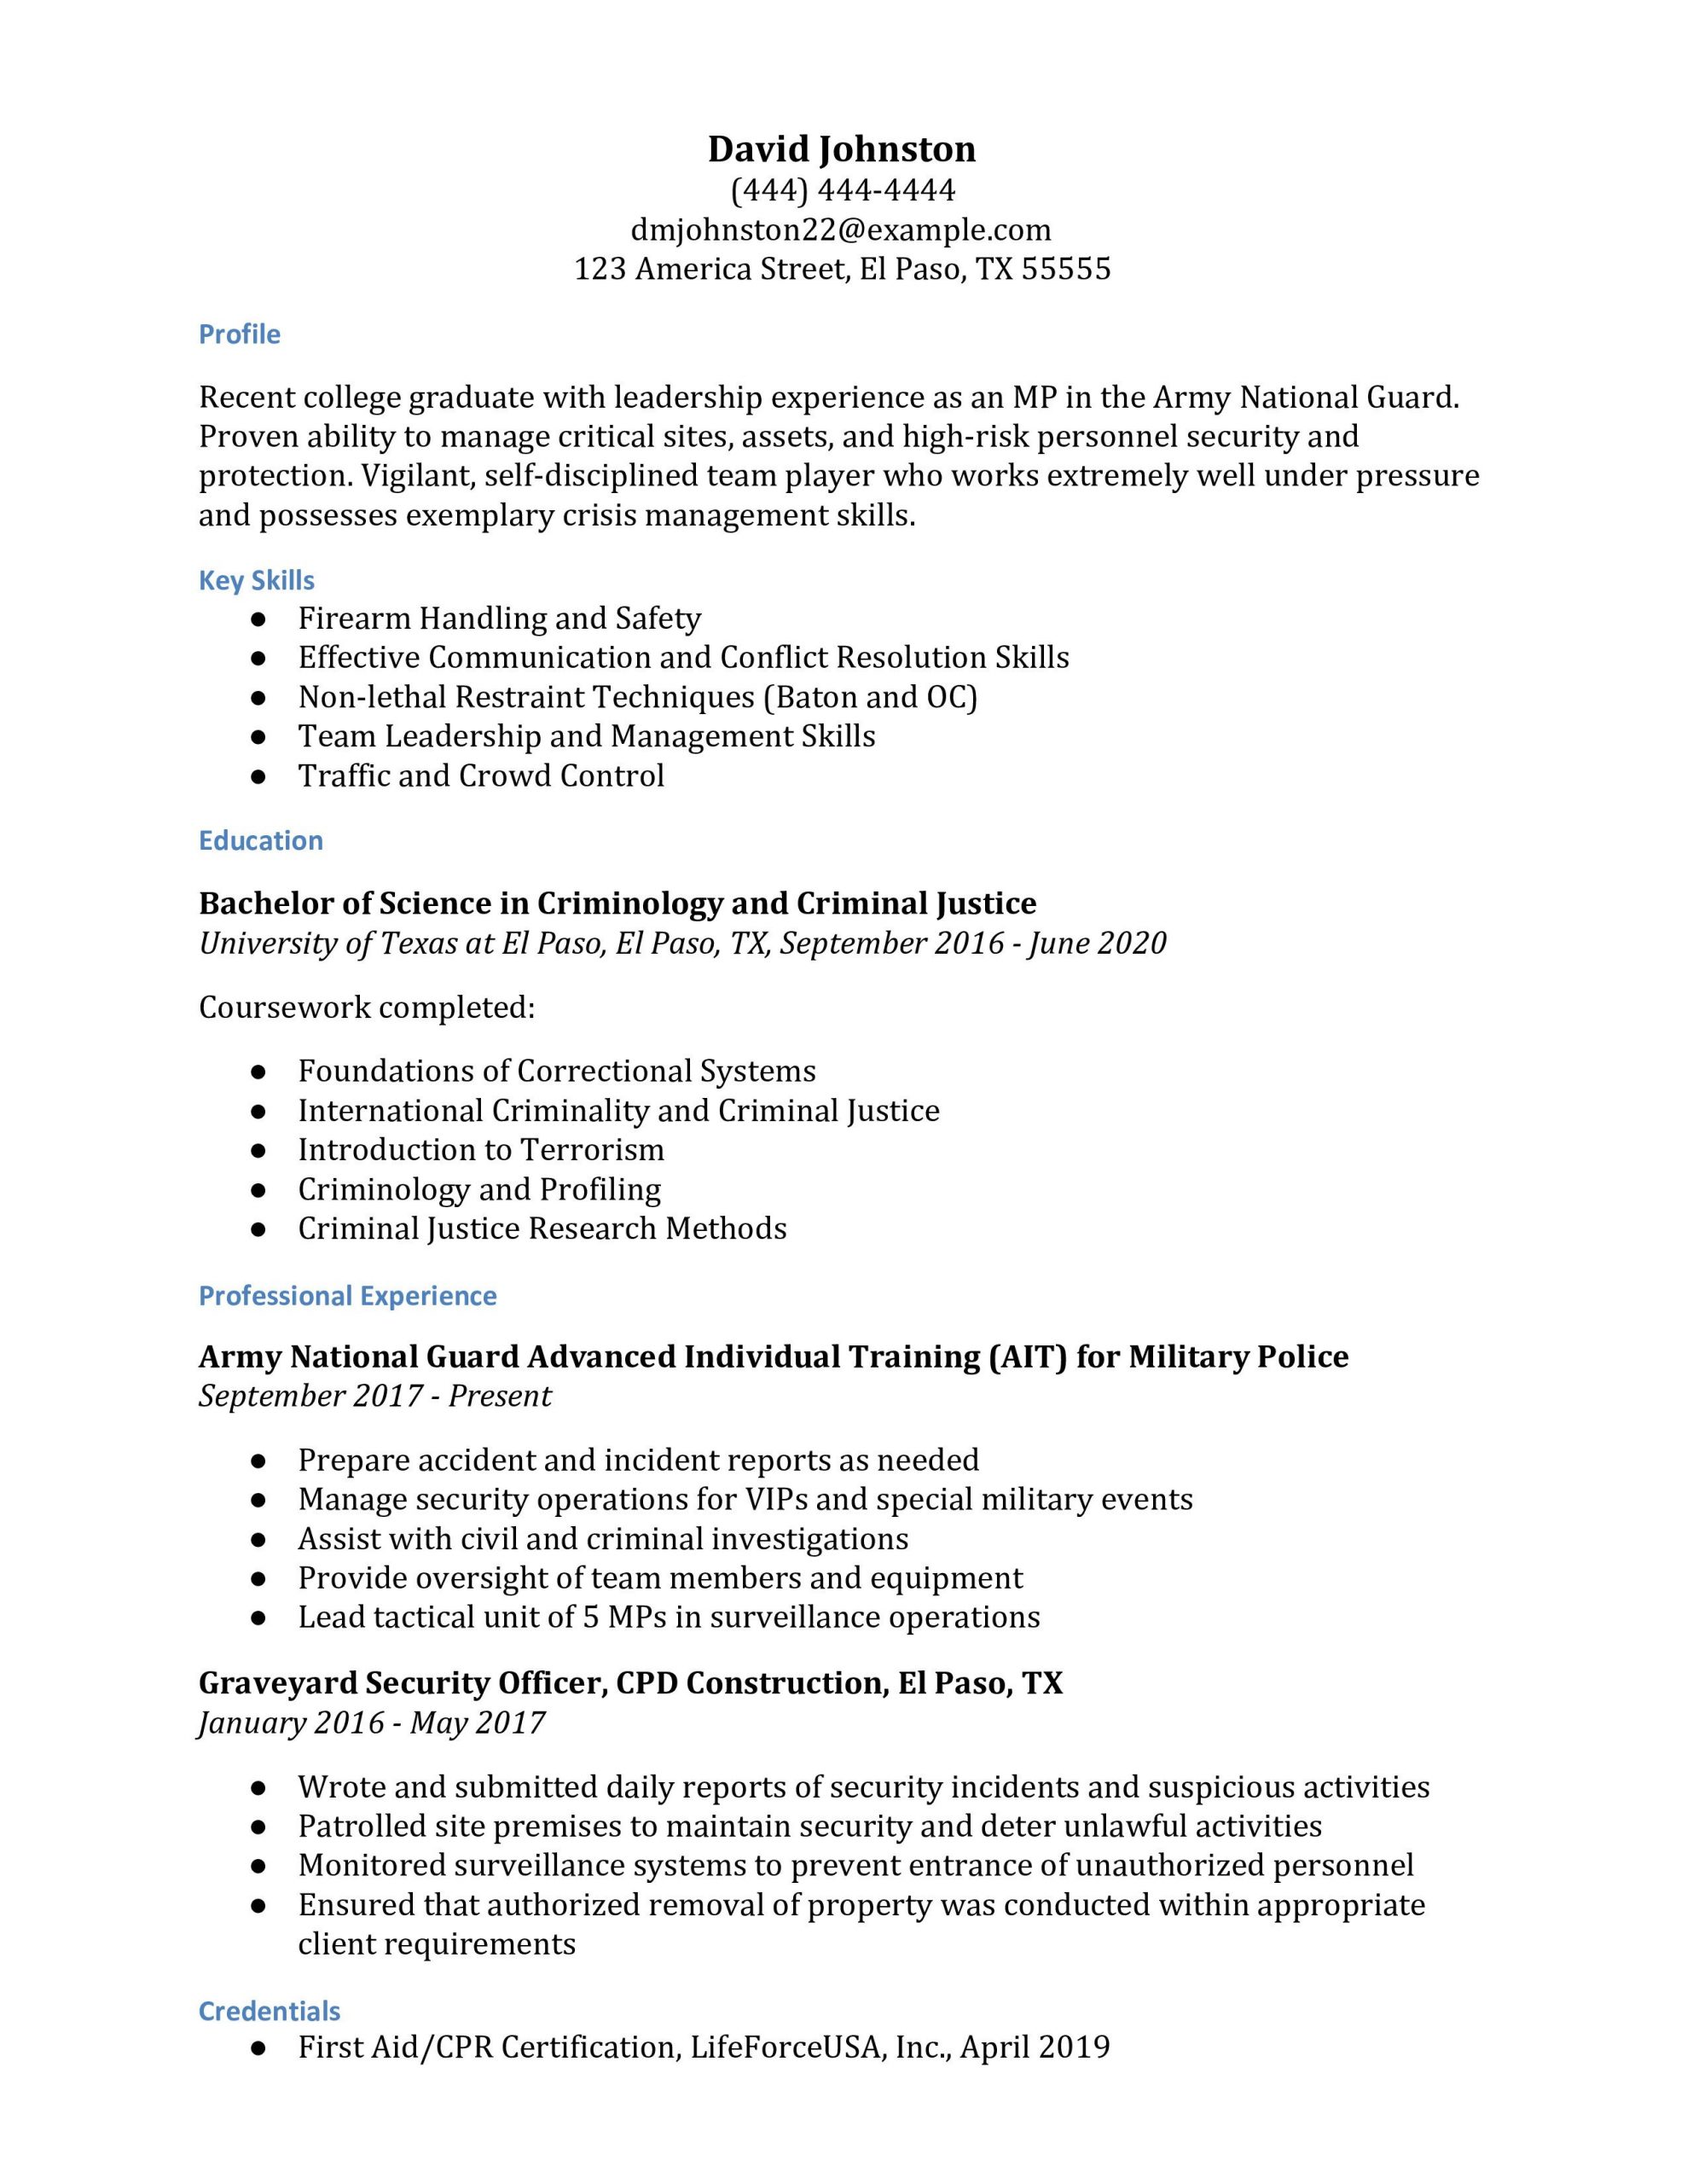 Sample Military Resume for Civilian Job Military-to-civilian Resume Examples – Resumebuilder.com